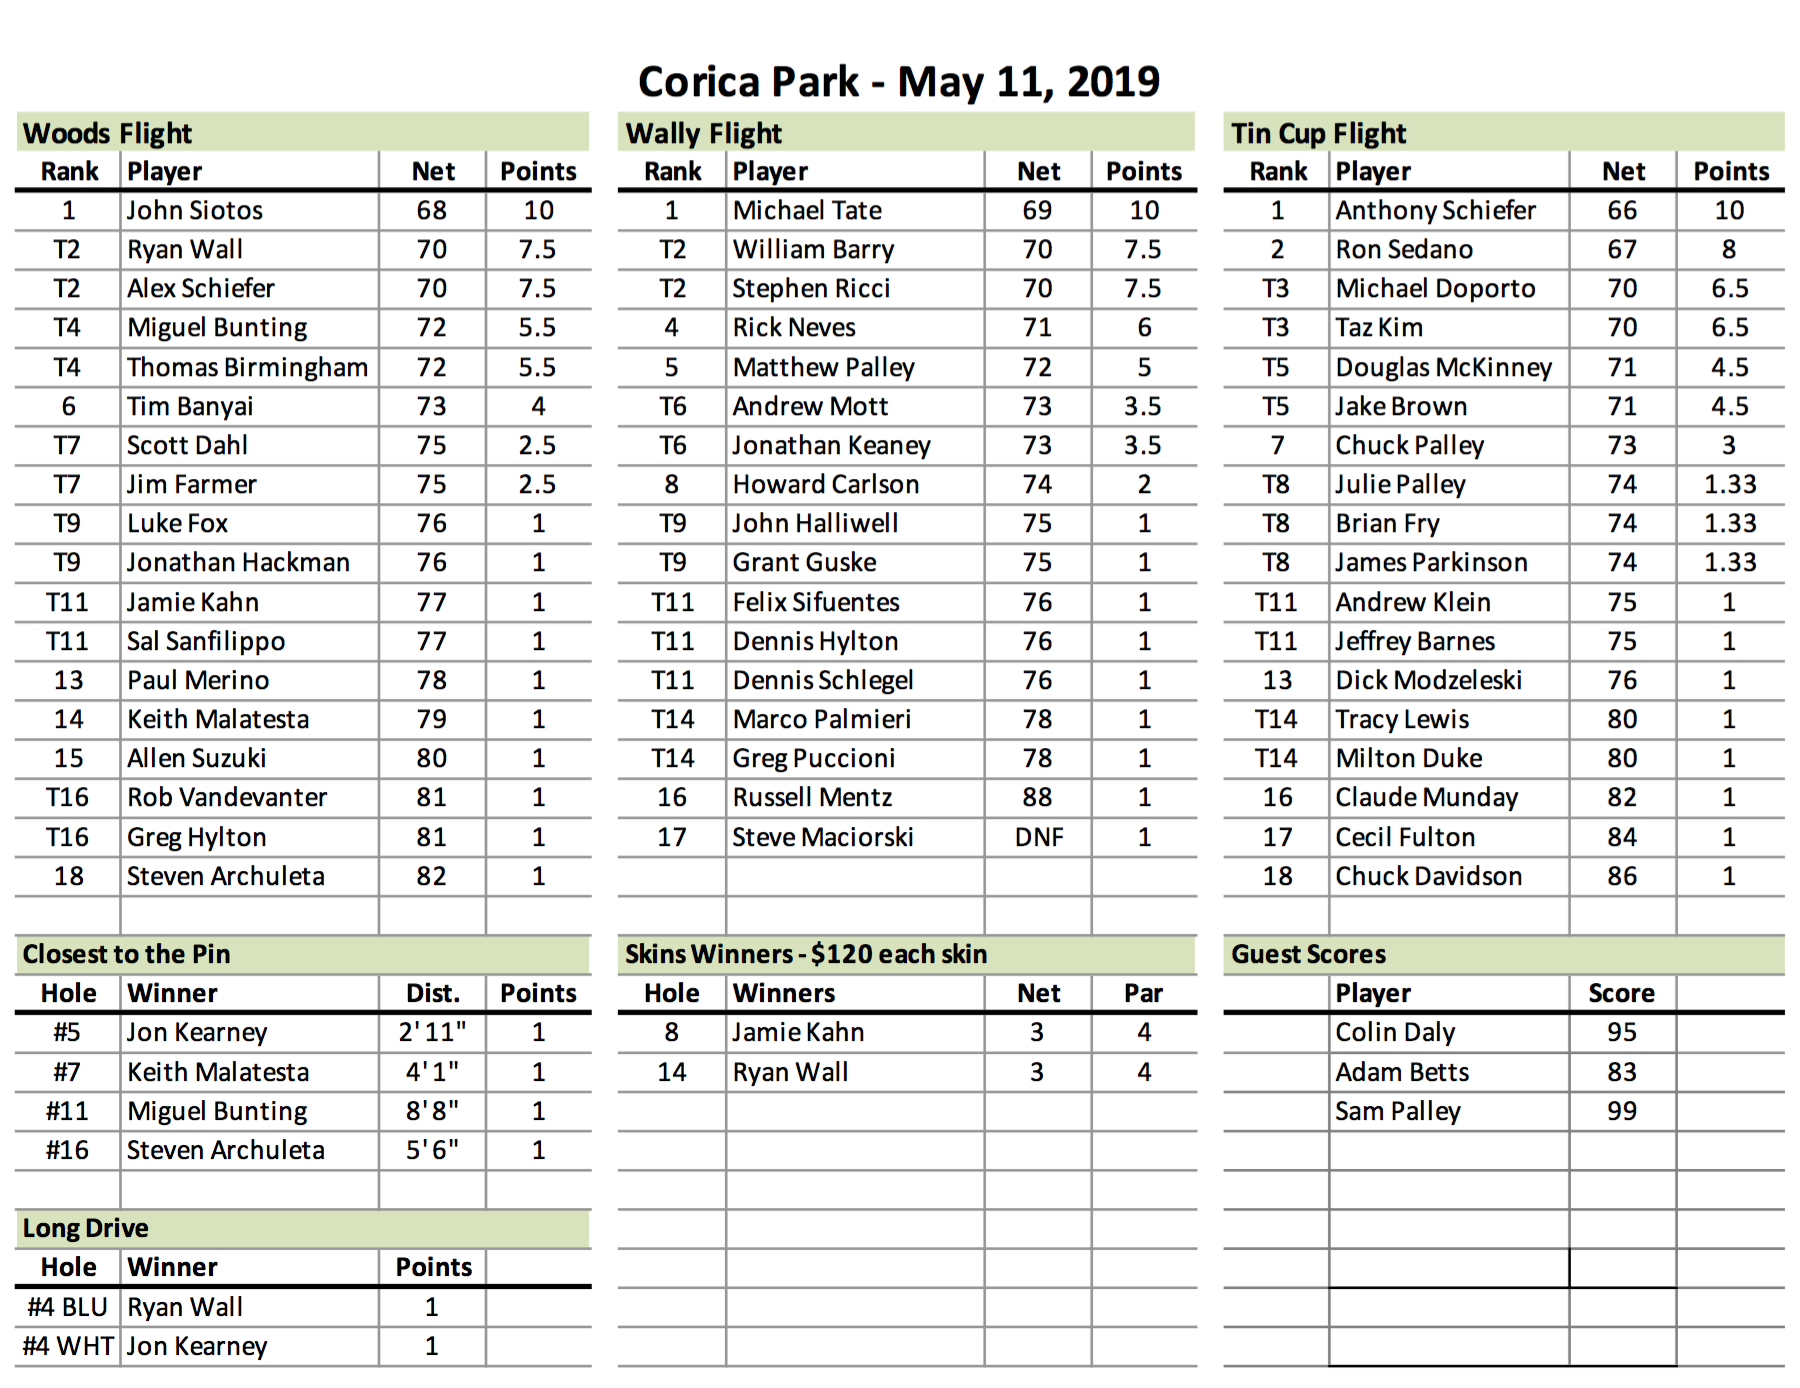 Corica Park Results